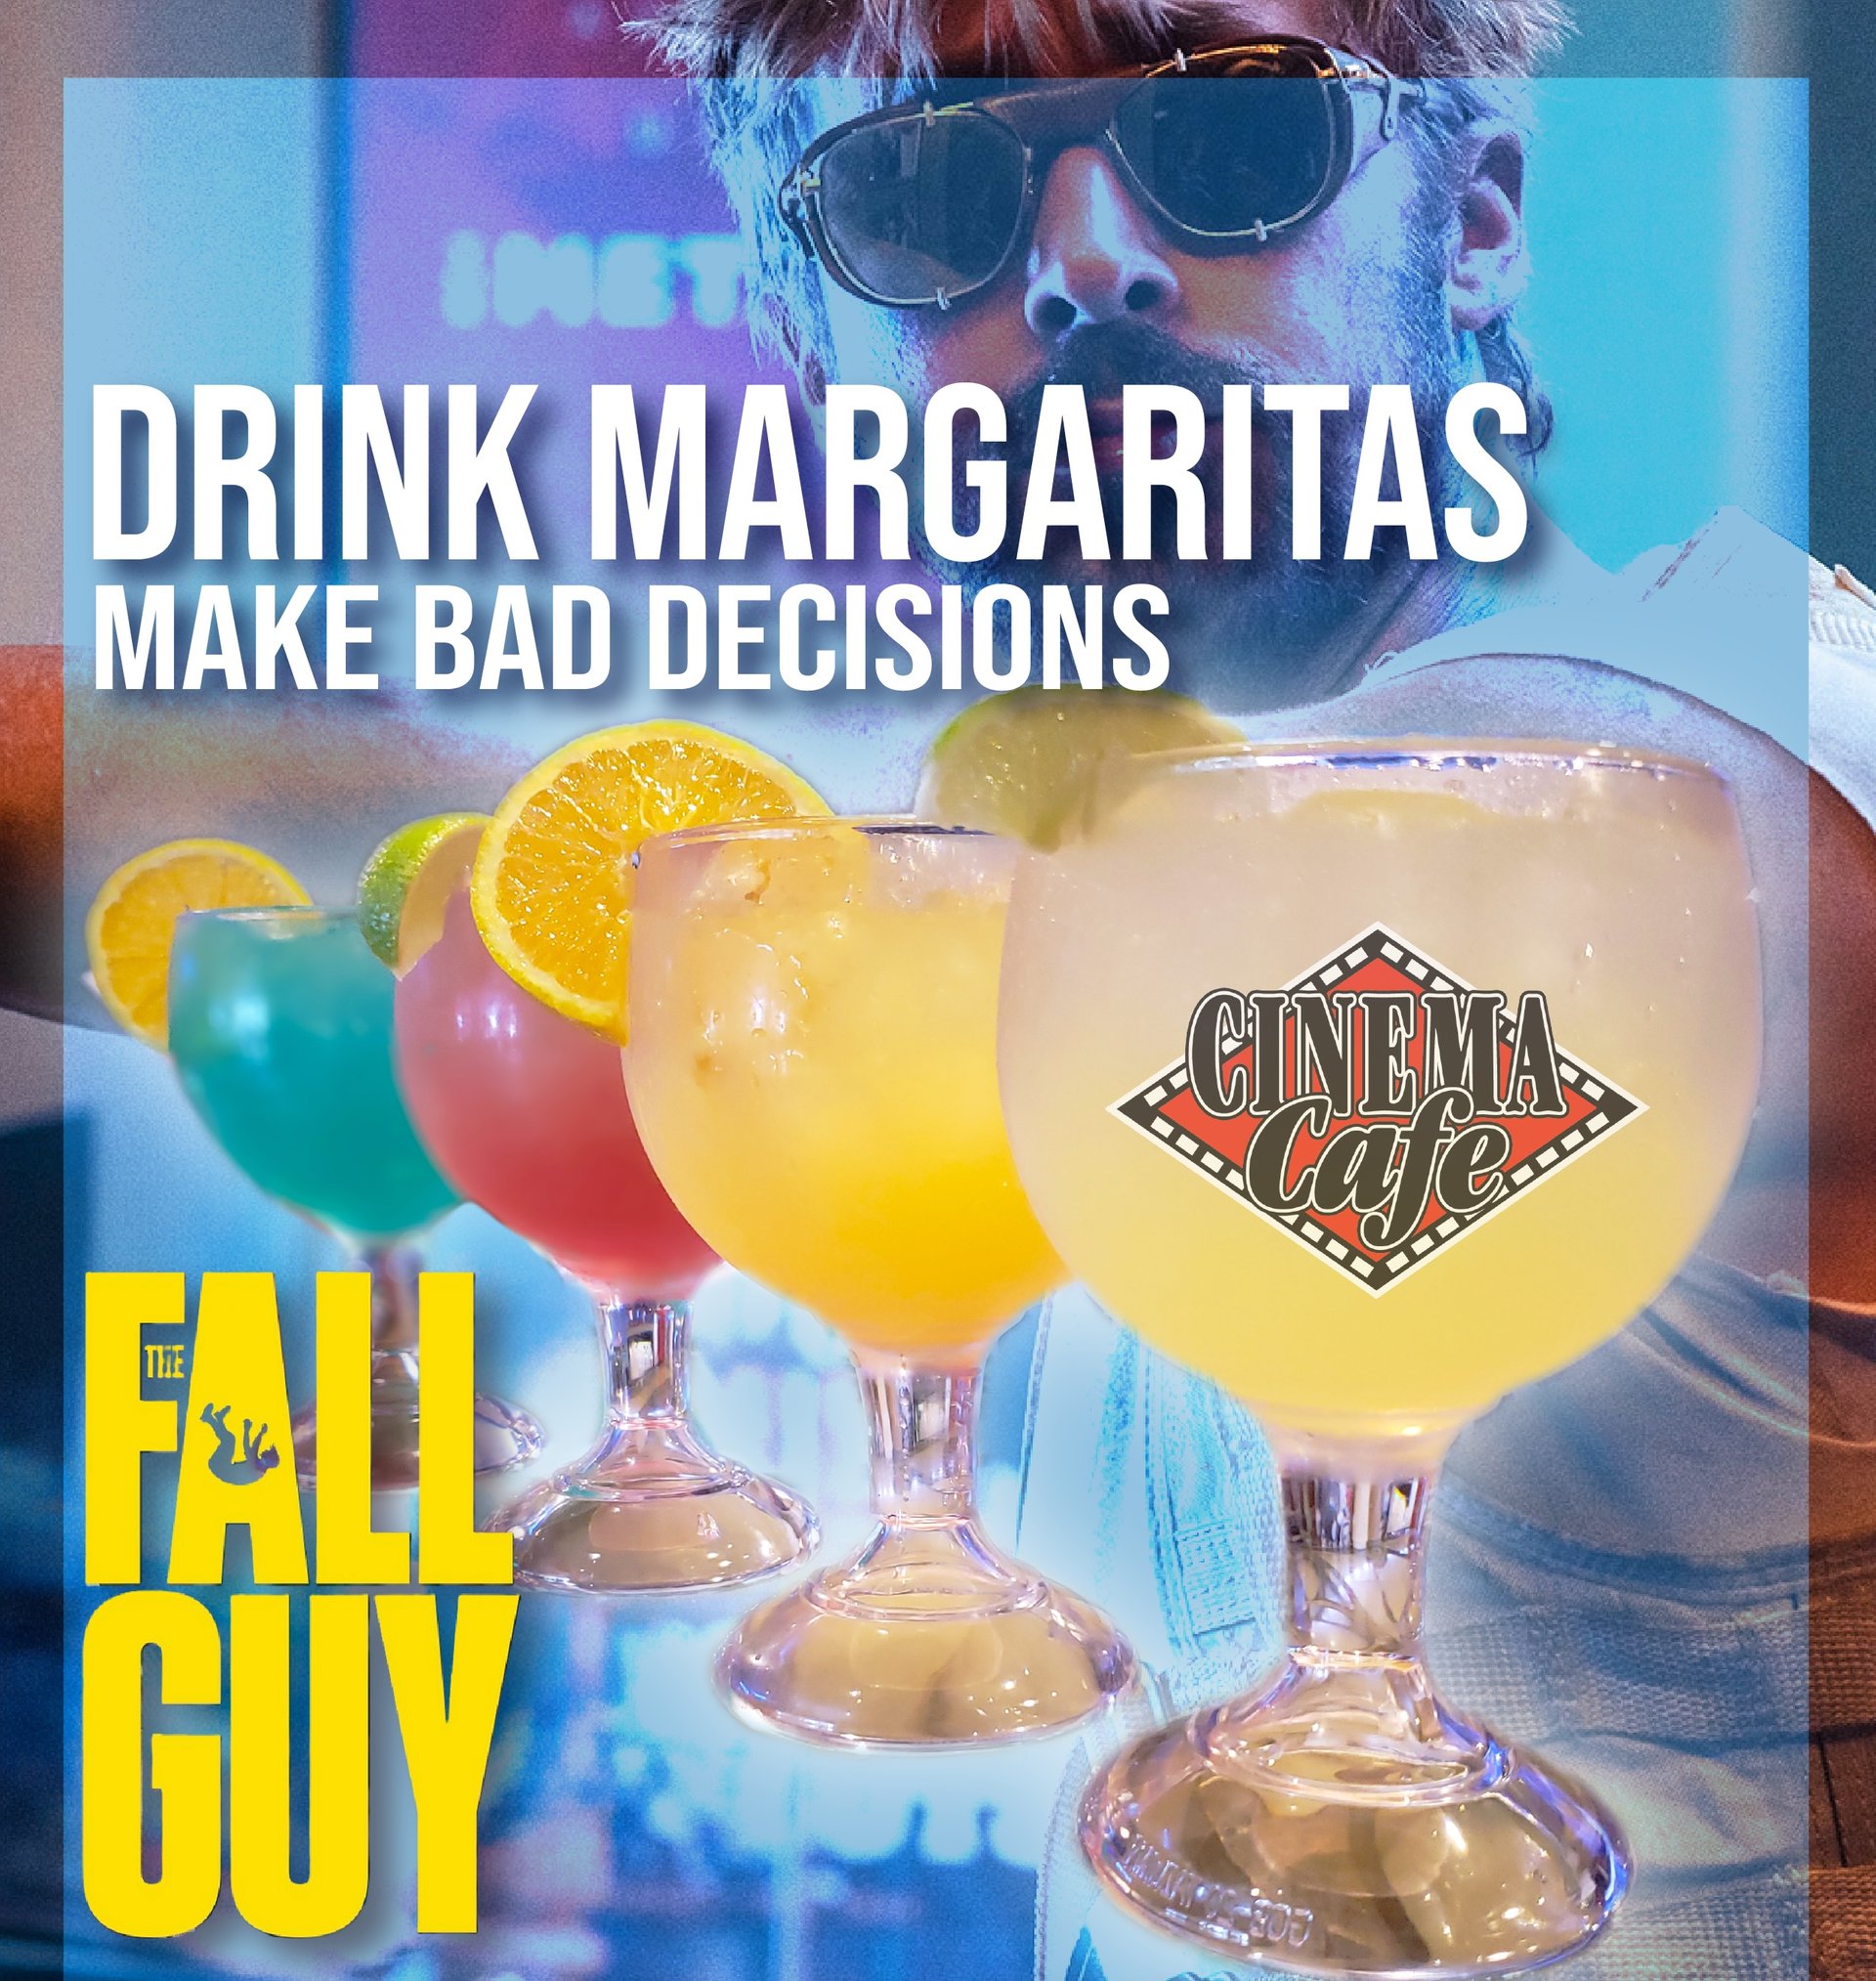 Drink Margaritas and Make Bad Decisions